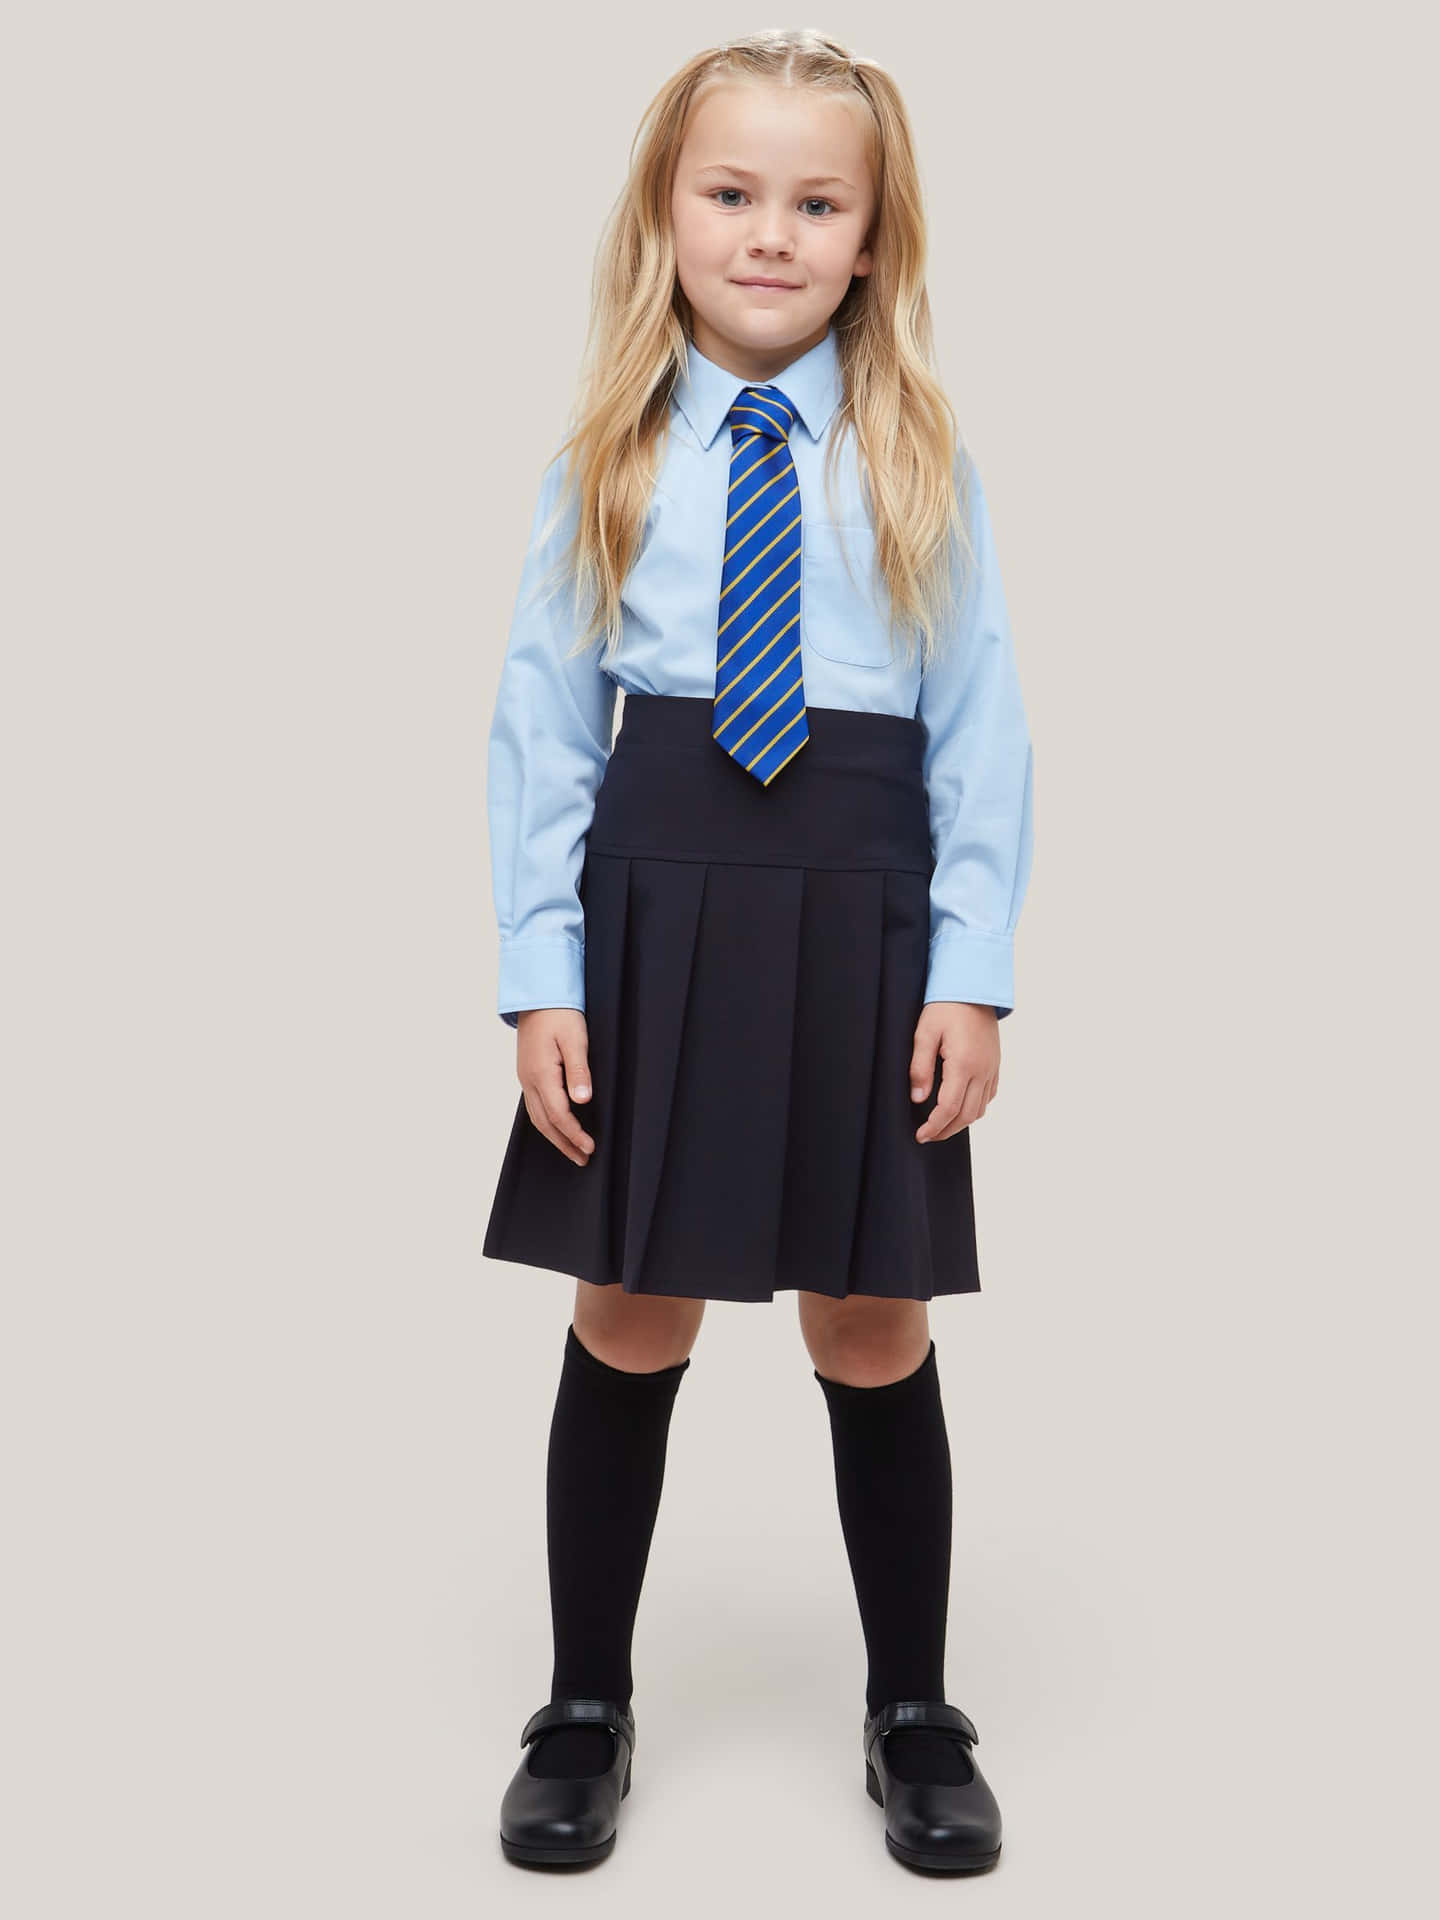 School Girl Cute Uniform Picture